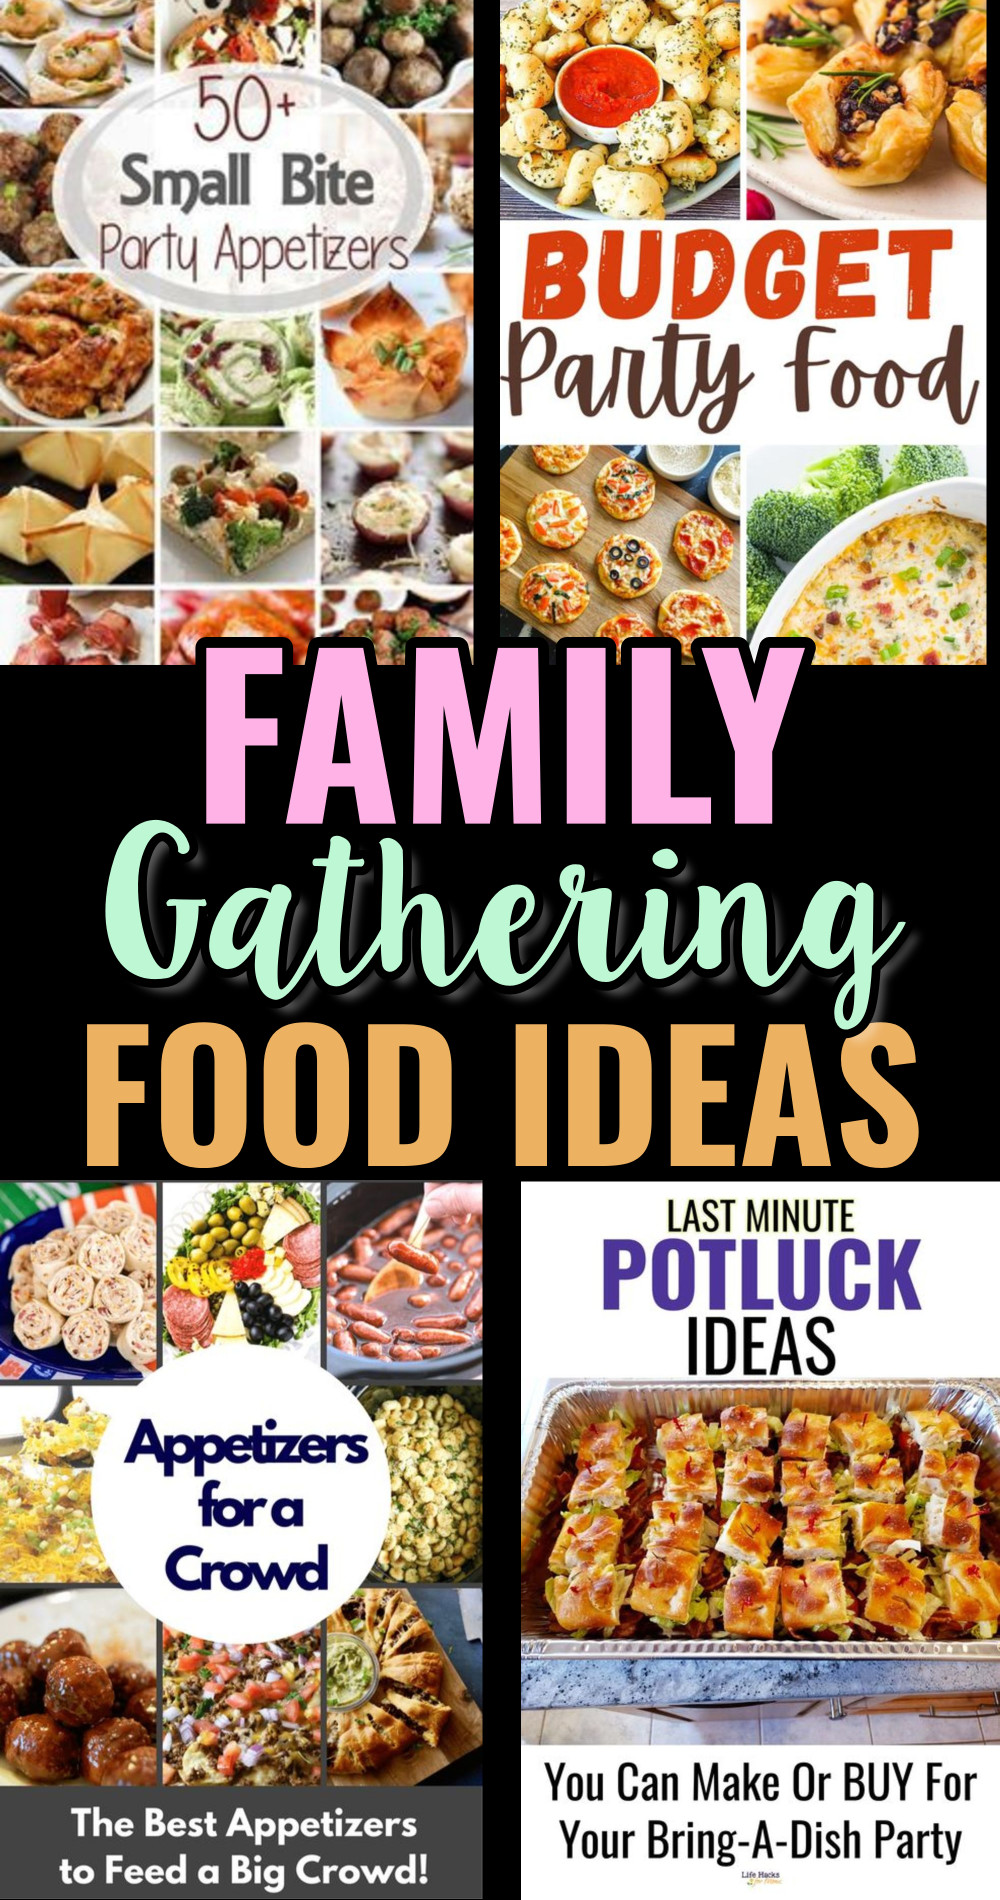 Family gathering food ideas